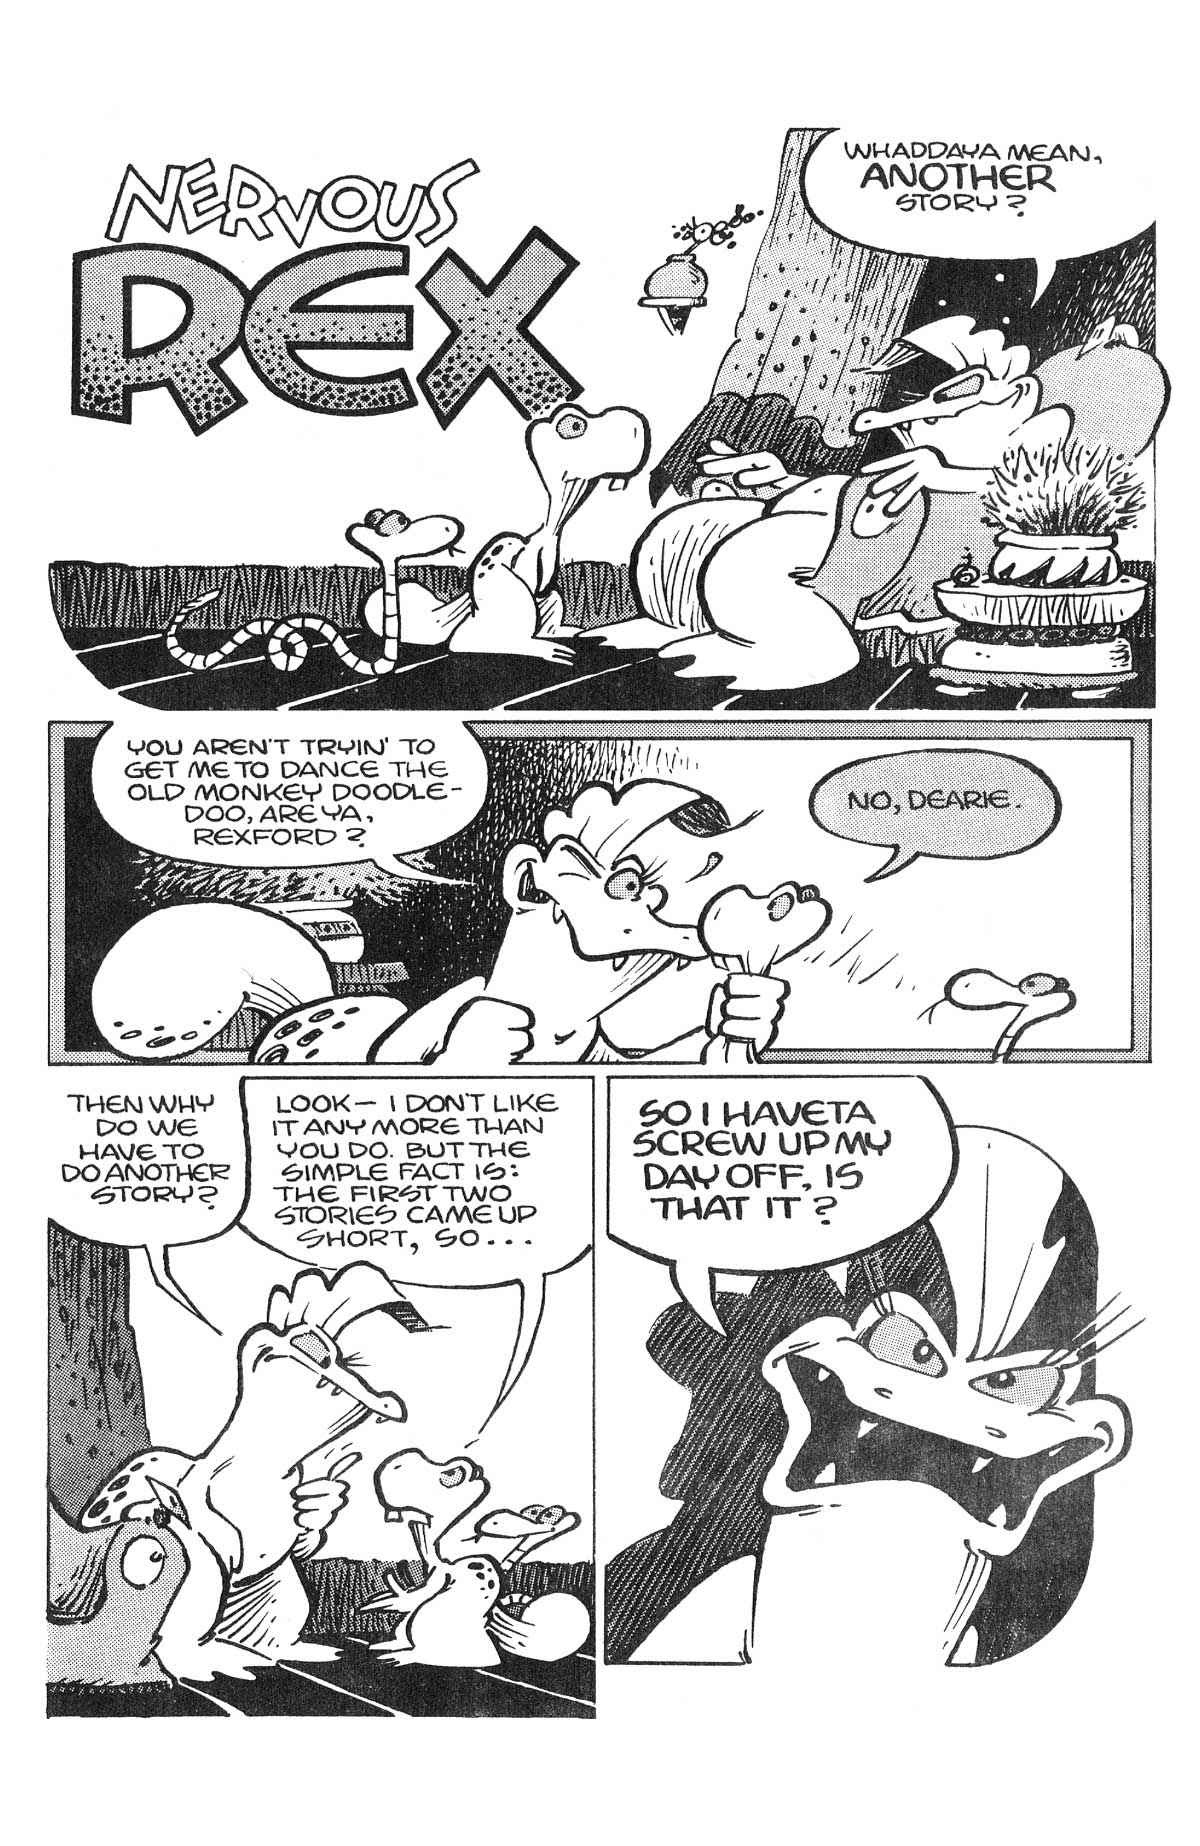 Read online Nervous Rex comic -  Issue #4 - 23